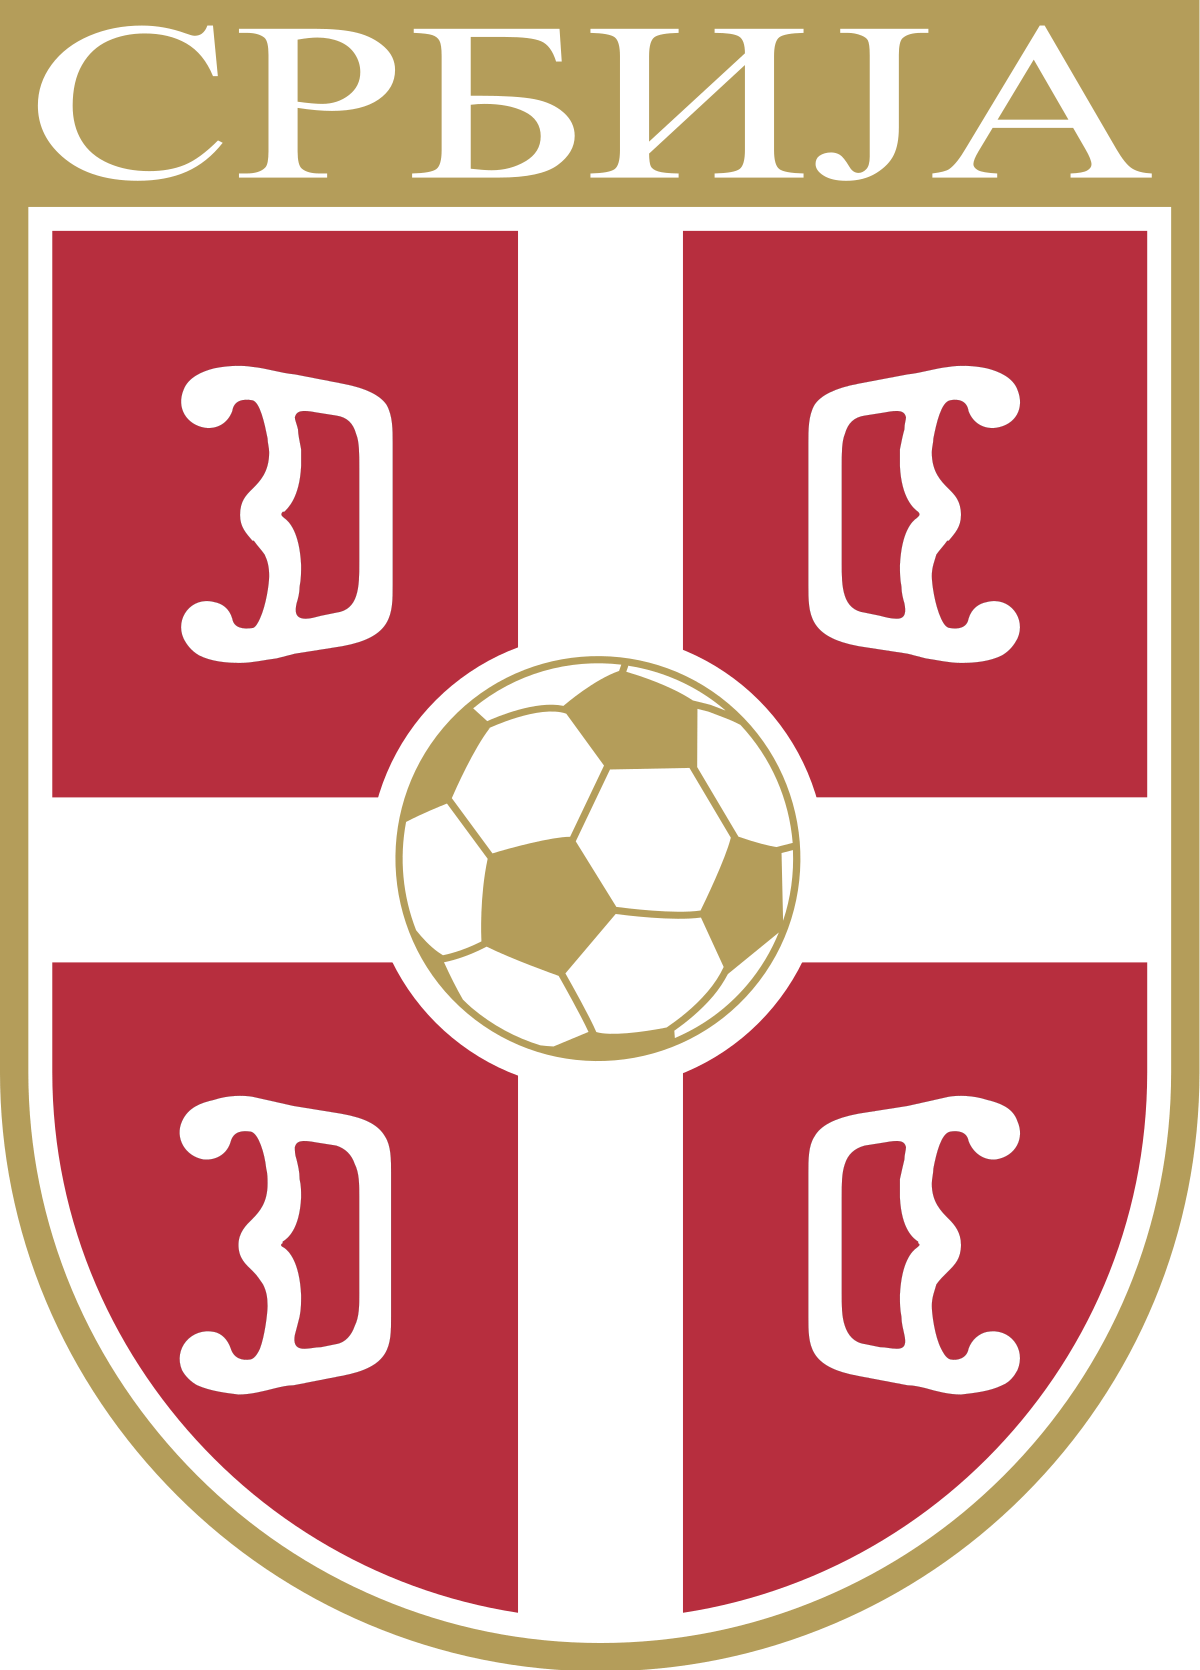 Serbia Soccer Logo - Serbia national football team